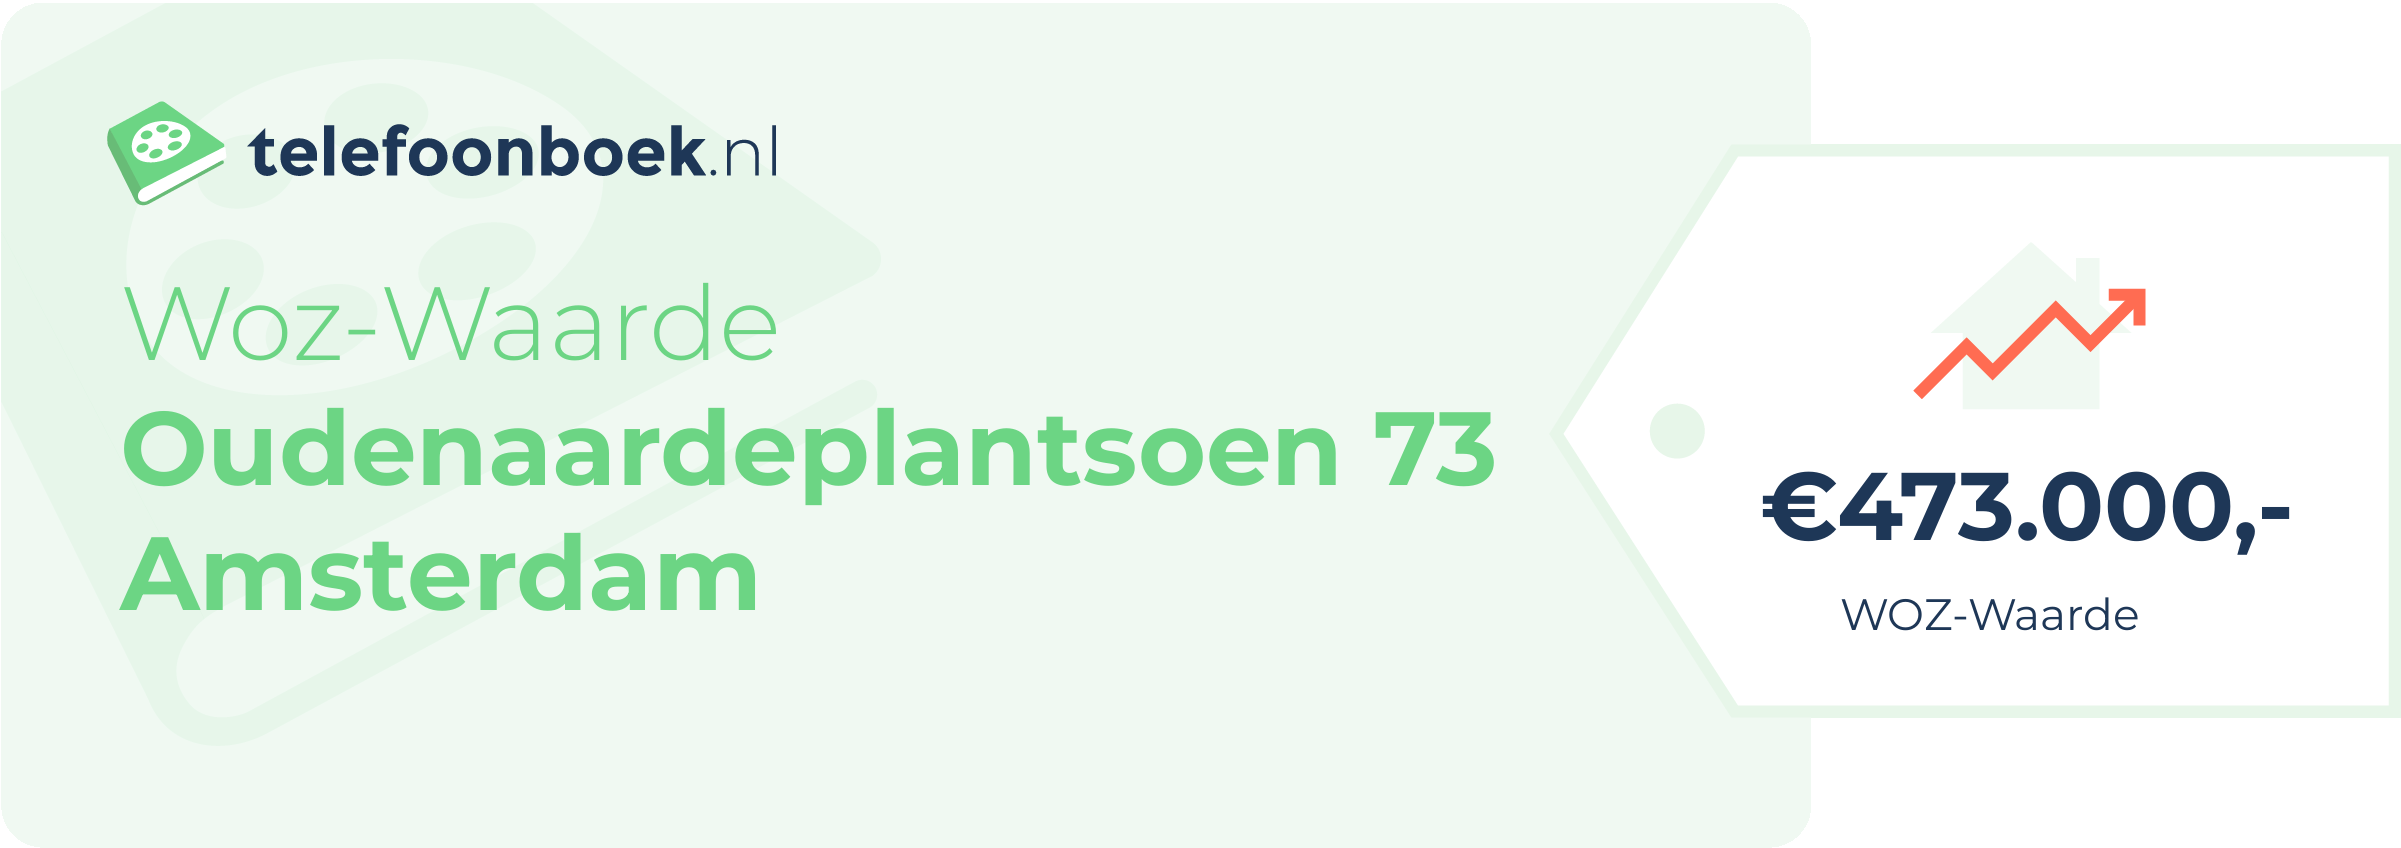 WOZ-waarde Oudenaardeplantsoen 73 Amsterdam